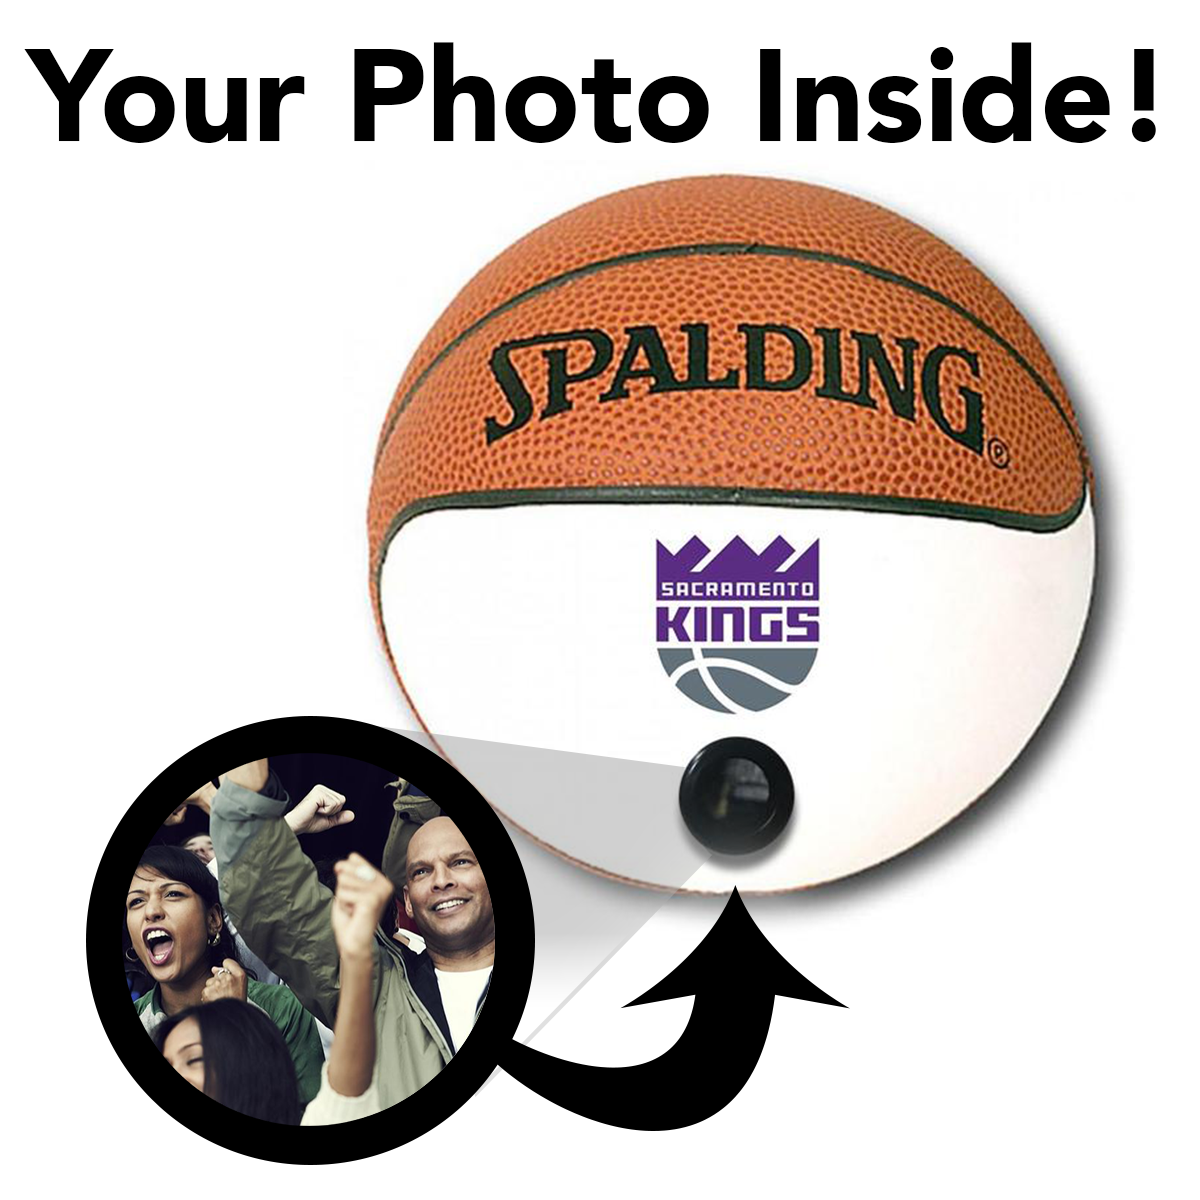 Kings NBA Collectible Miniature Basketball - Picture Inside - FANZ Collectibles - Fanz Collectibles